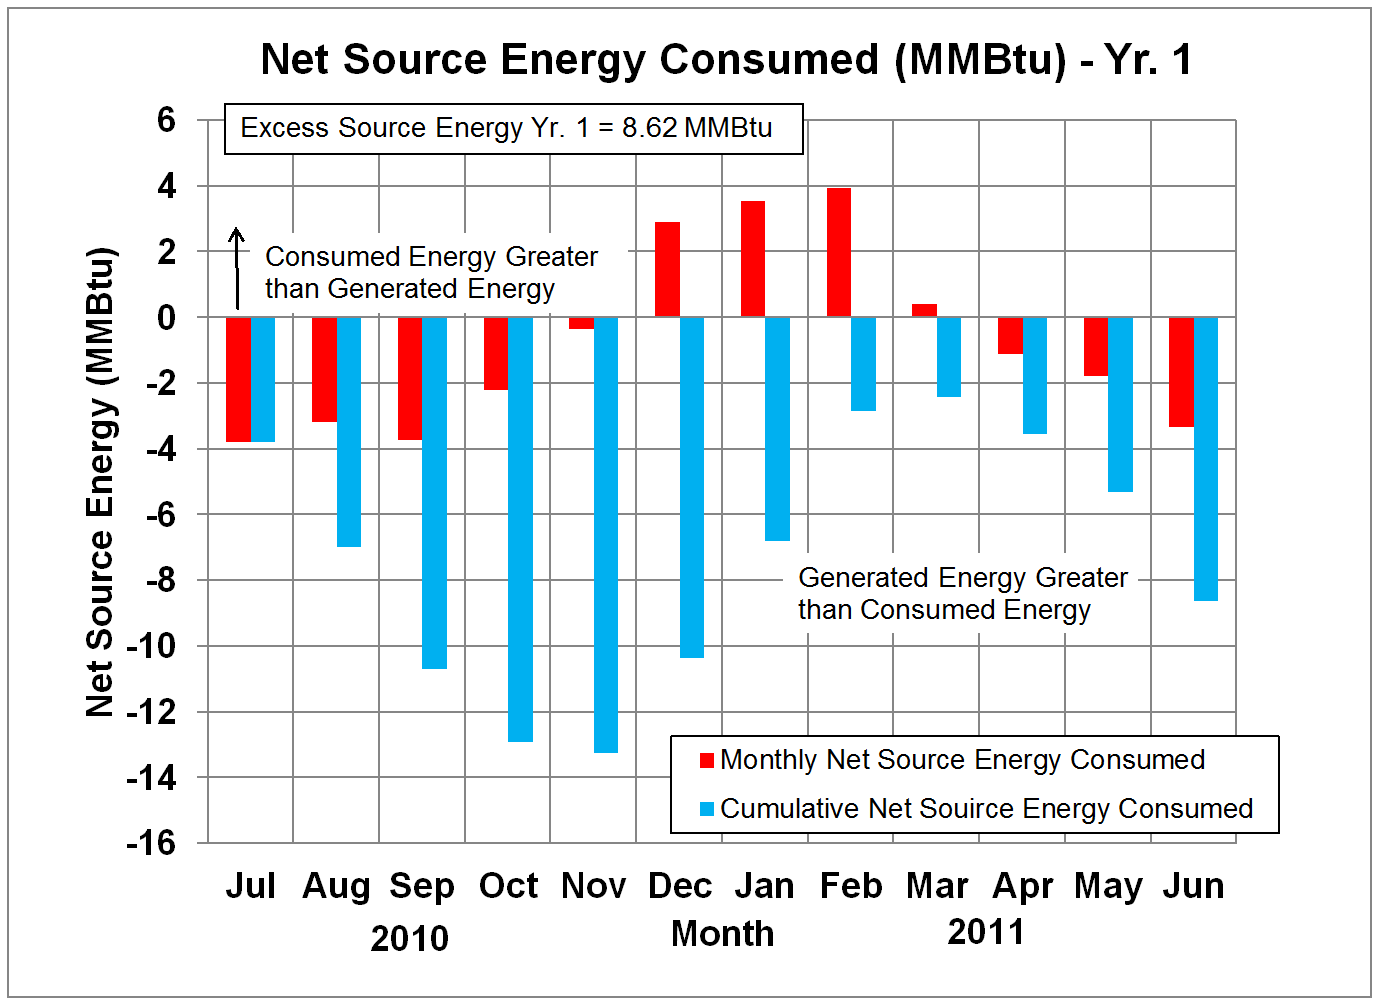 Net Source Energy in Million Btu's - Yr. 1